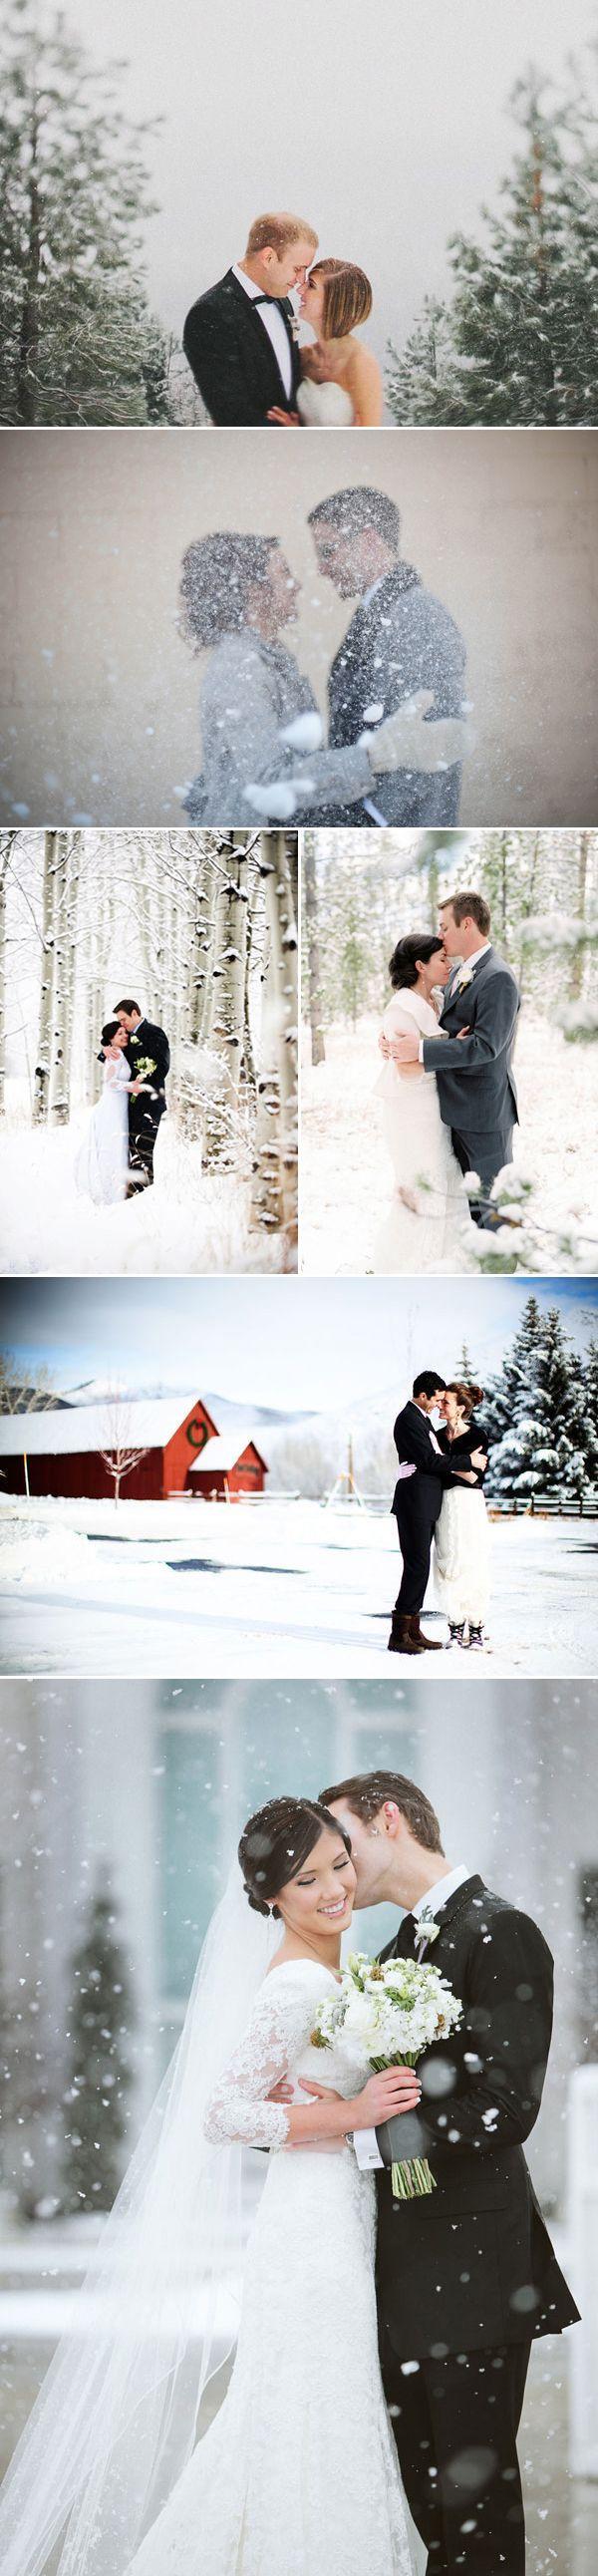 زفاف - 23 Dreamy Winter Wedding Photos